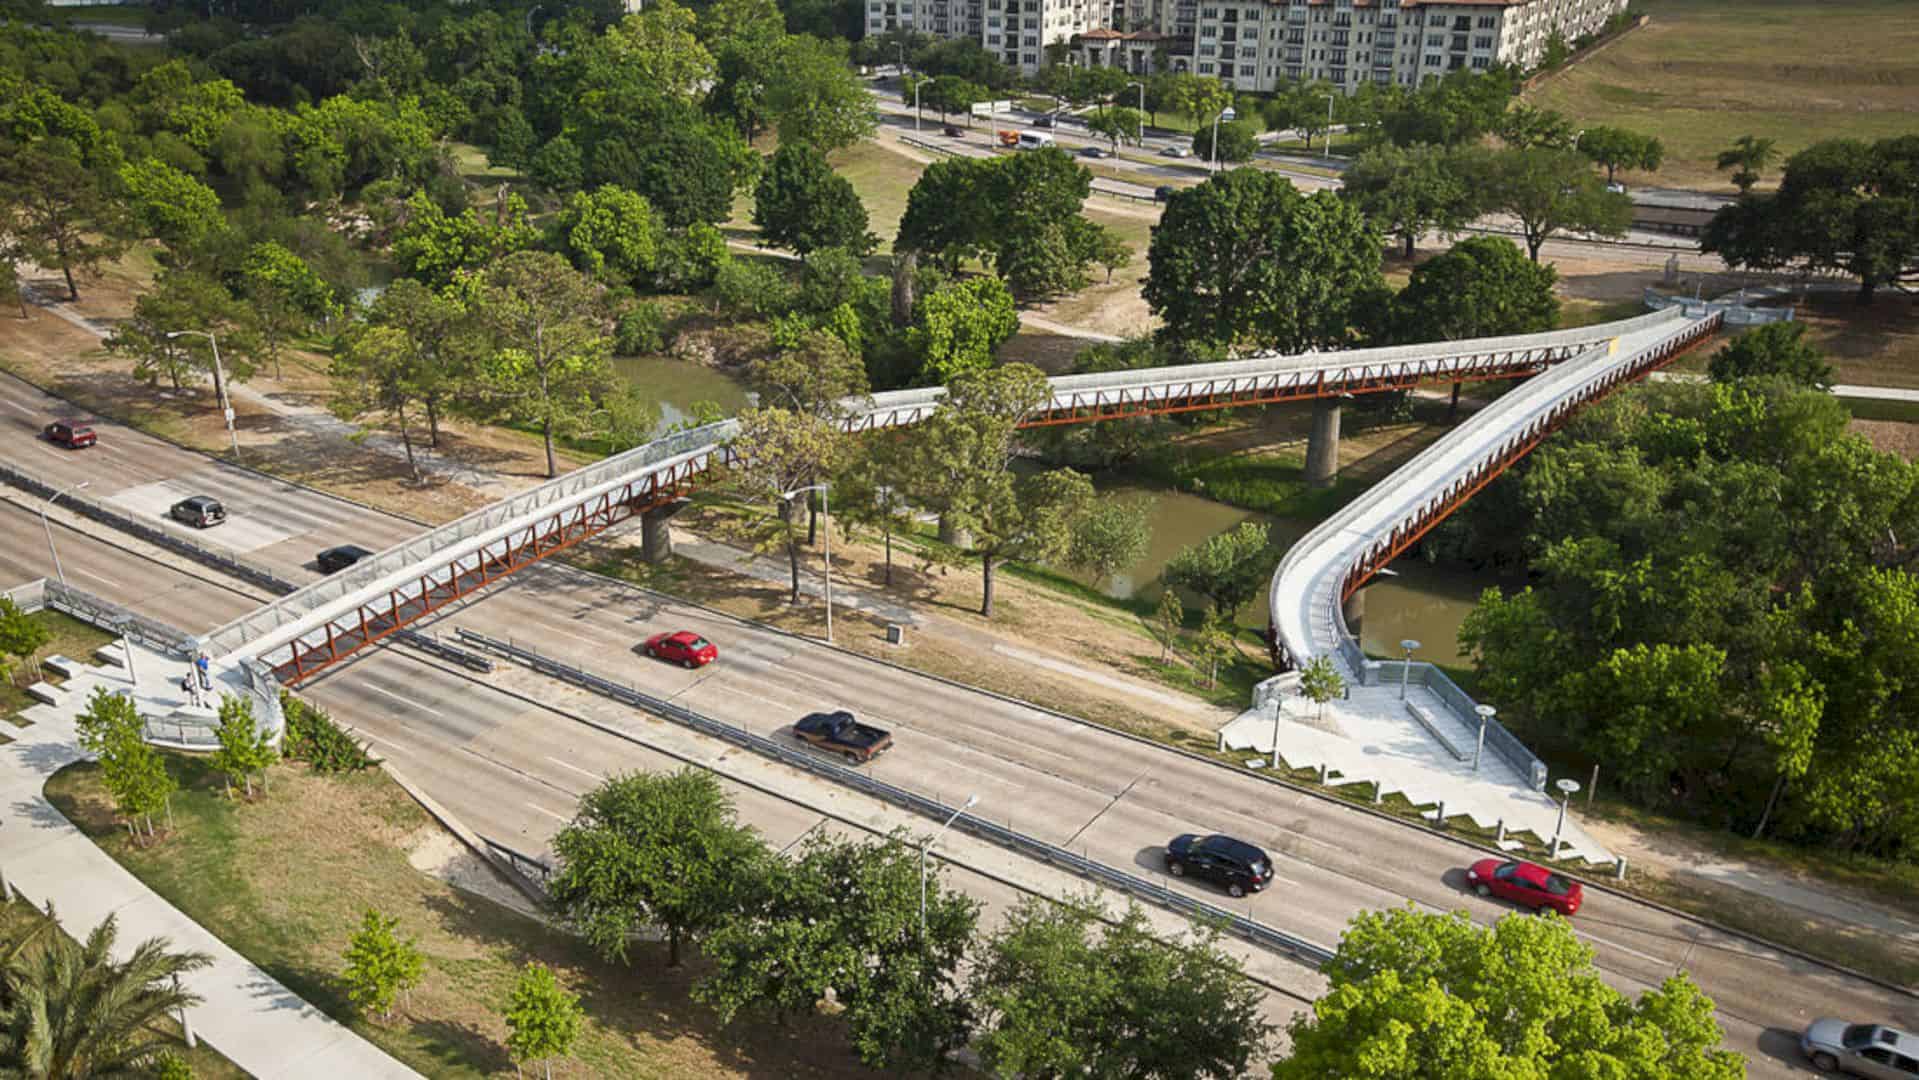 Rosemont Pedestrian Bridges And Trails Layer Pedestrian Infrastructure Onto Buffalo Bayou Corridor 9